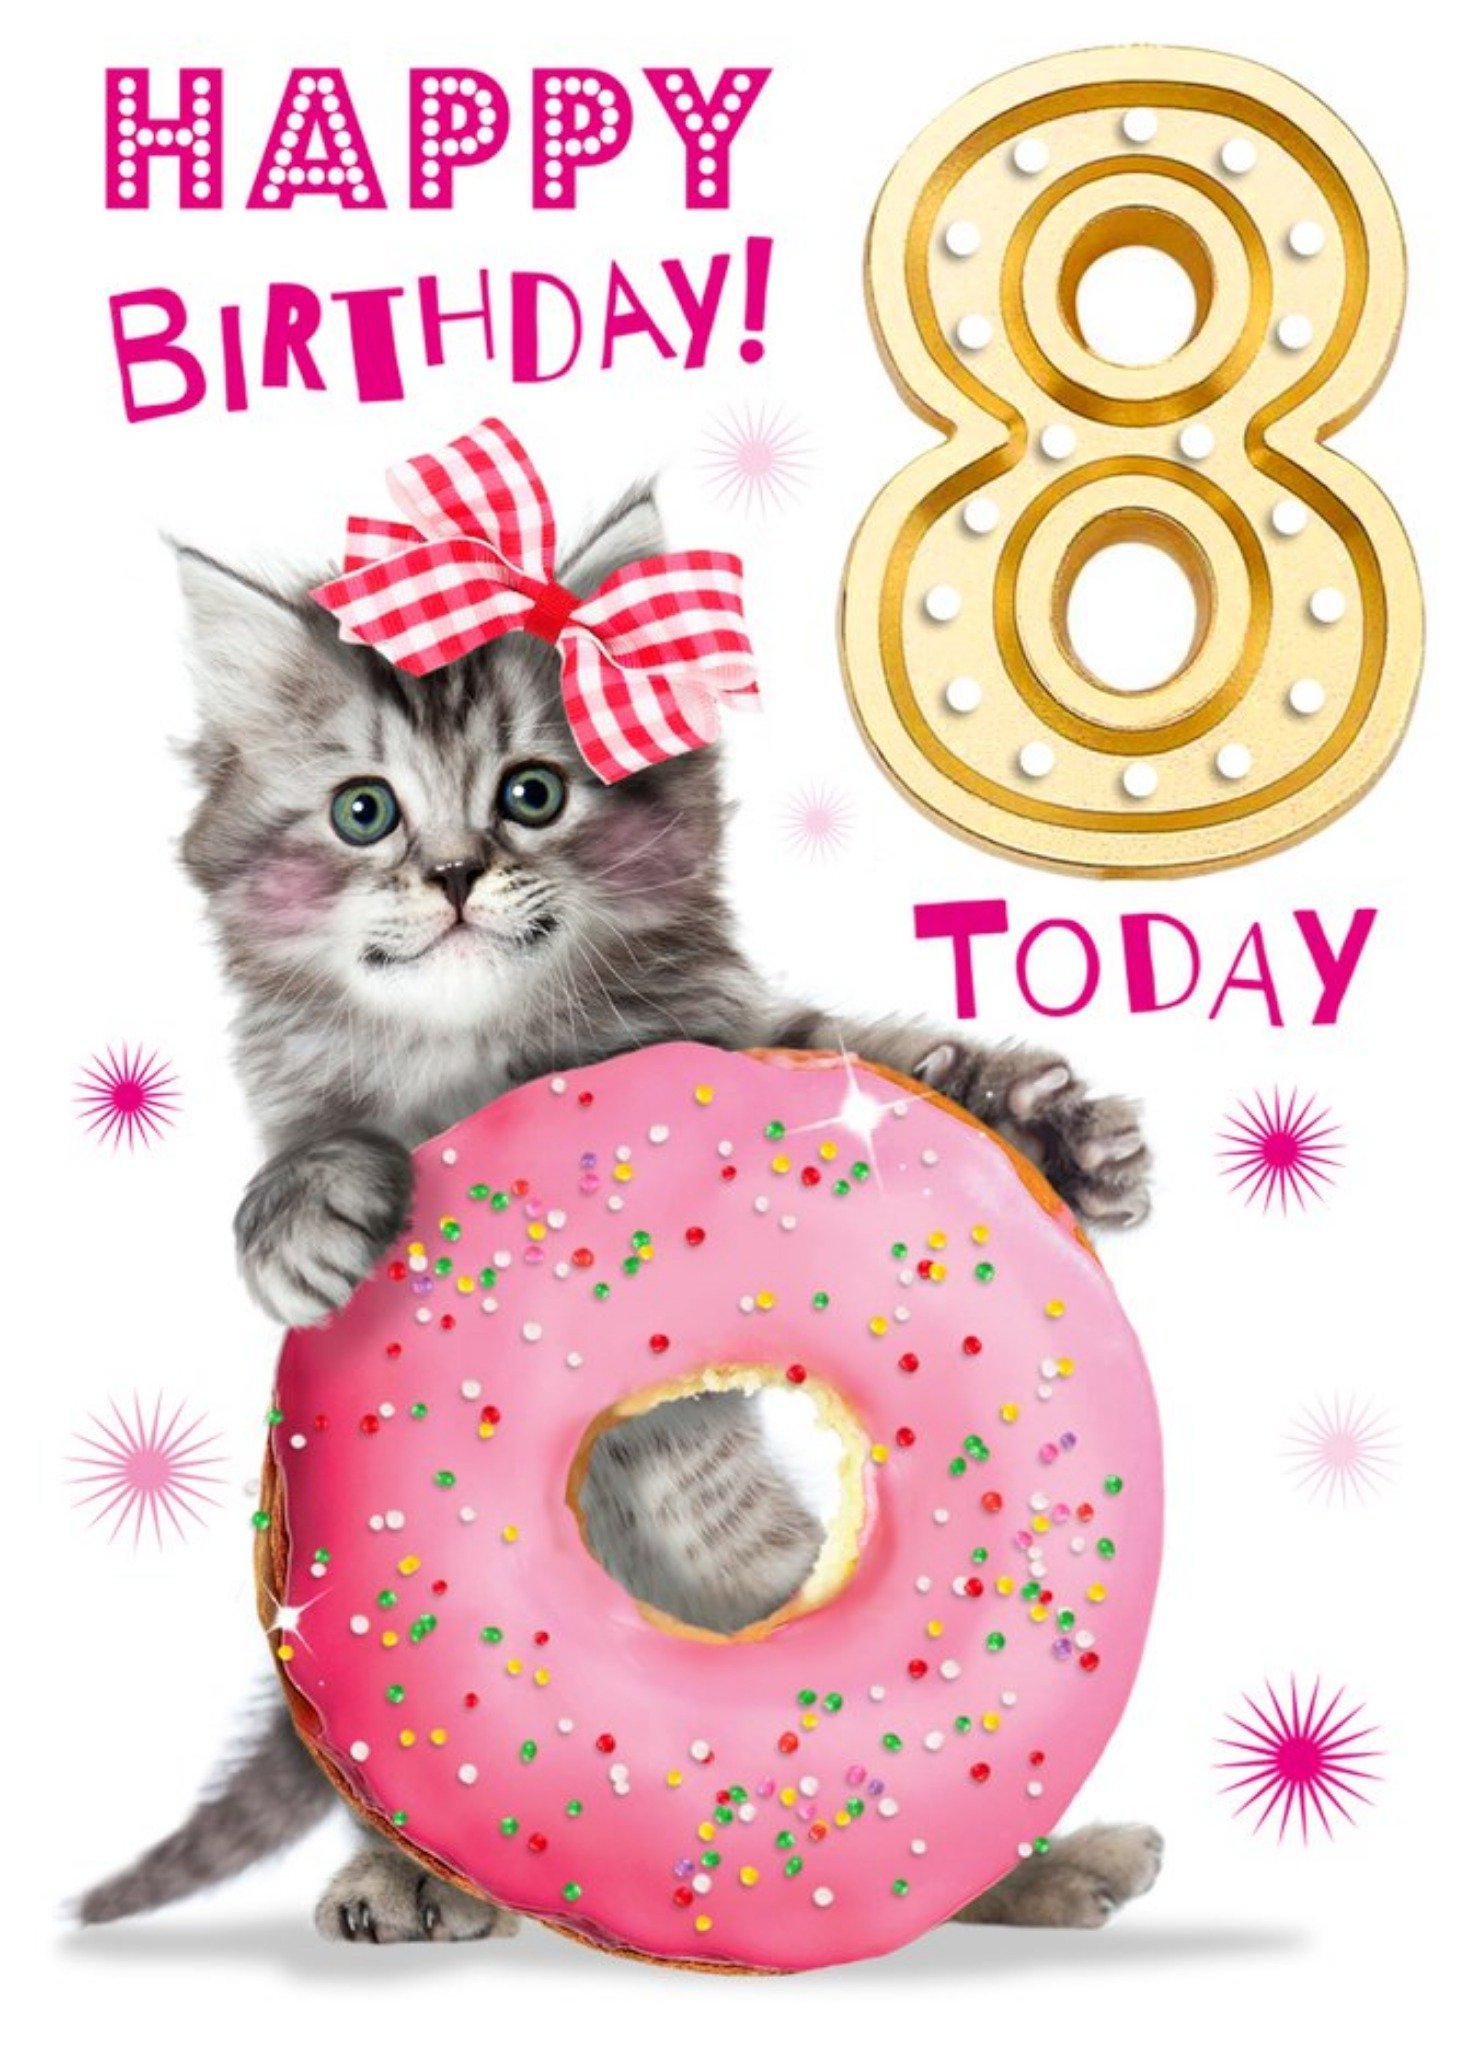 Moonpig Cute Kitten With Doughnut 8th Birthday Card, Large